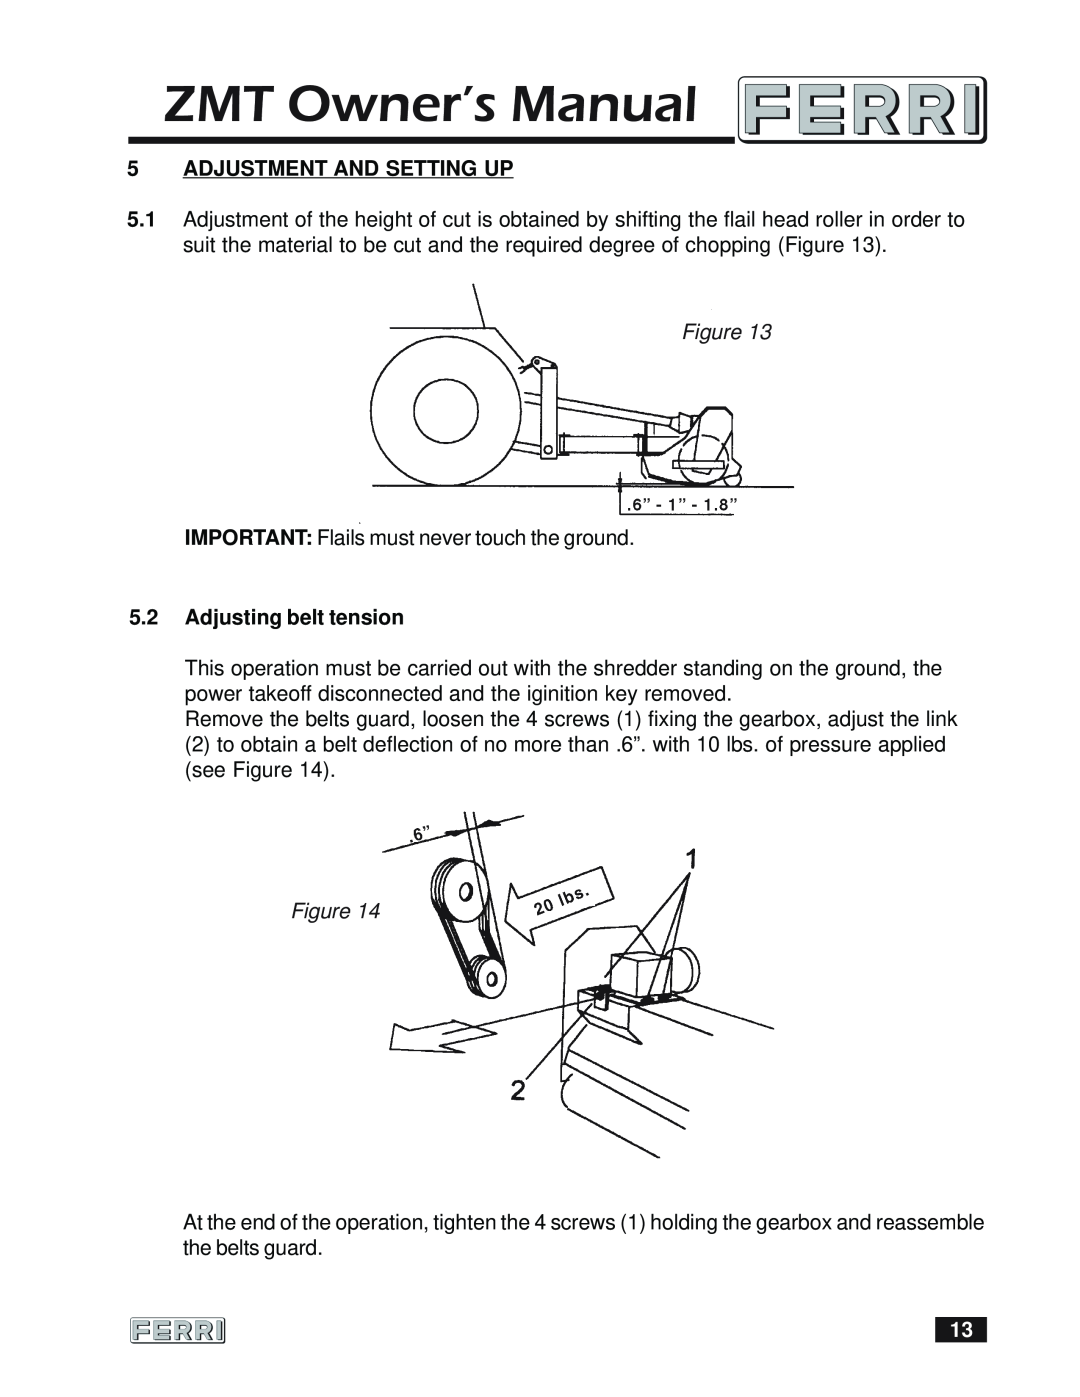 Ferris Industries 160 owner manual 5ADJUSTMENT AND SETTING UP, 5.2Adjusting belt tension, ZMT Owner’s Manual, Figure 